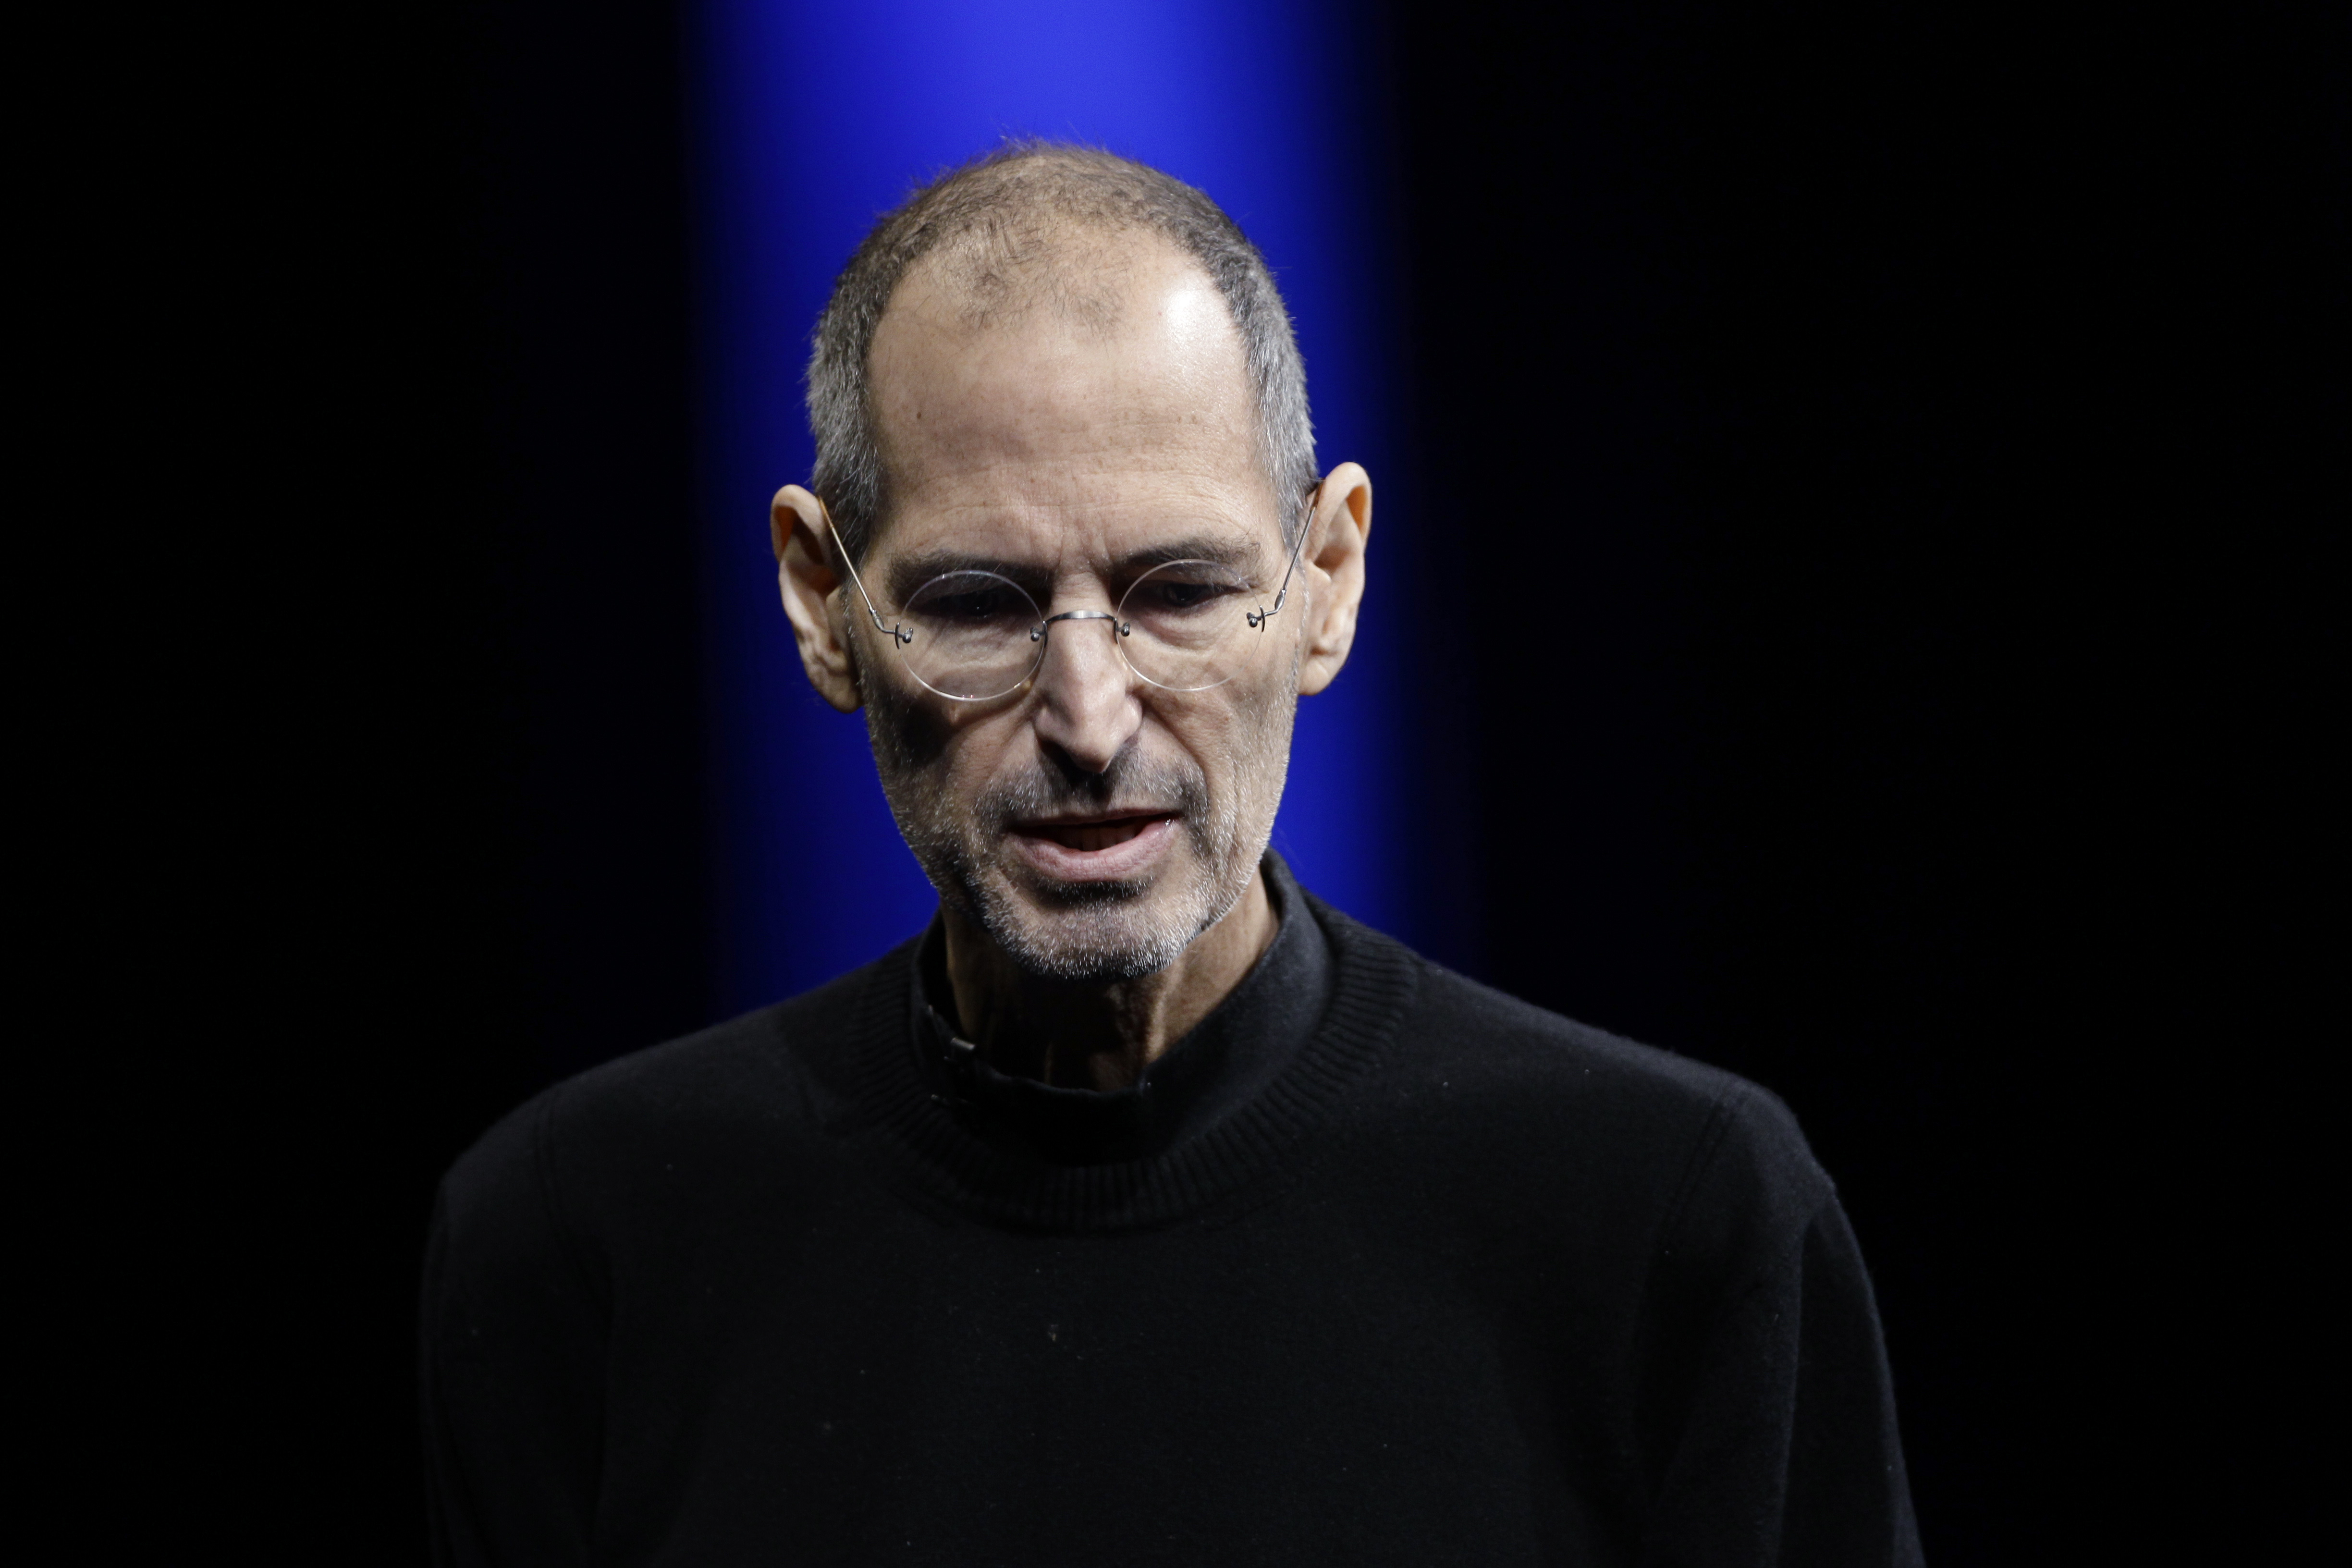 Rip Steve Jobs Apple Mac Ipod iPhone iPad Great